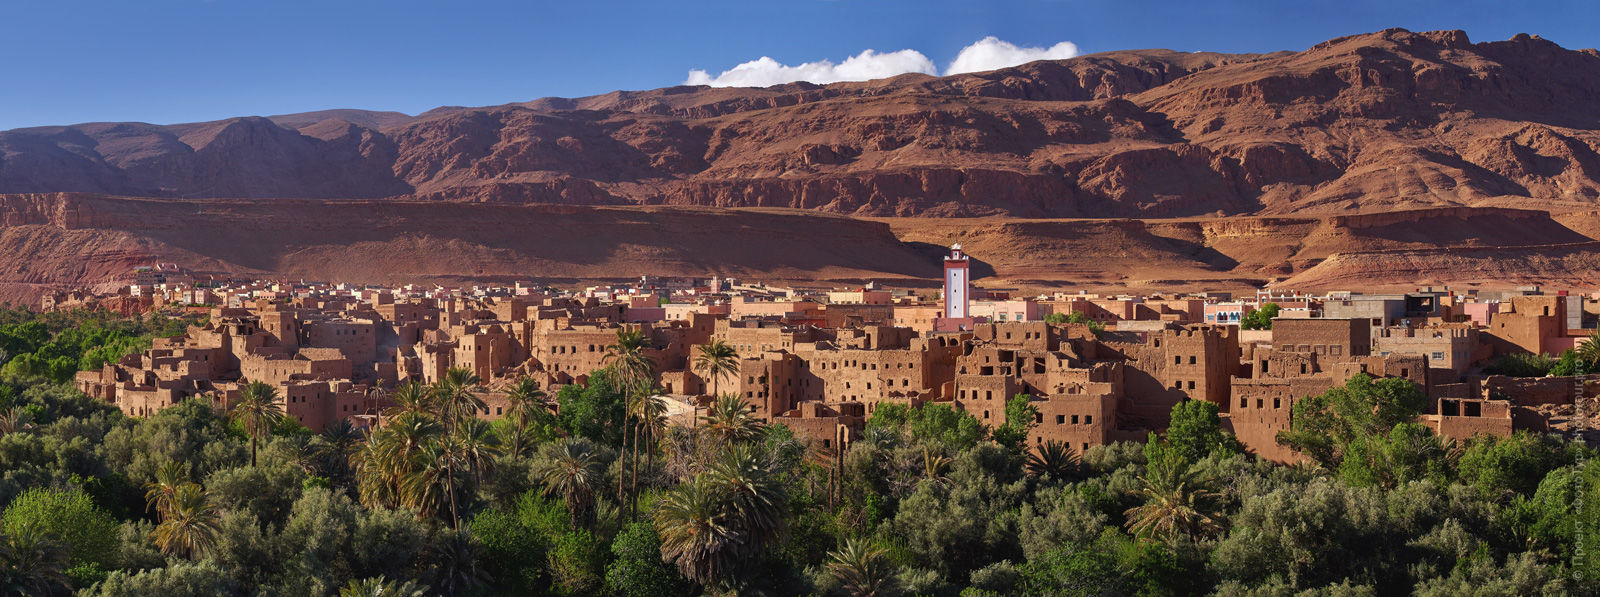 Tinghir, Morocco. Adventure photo tour: medina, cascades, sands and ports of Morocco, April 4 - 17, 2020.